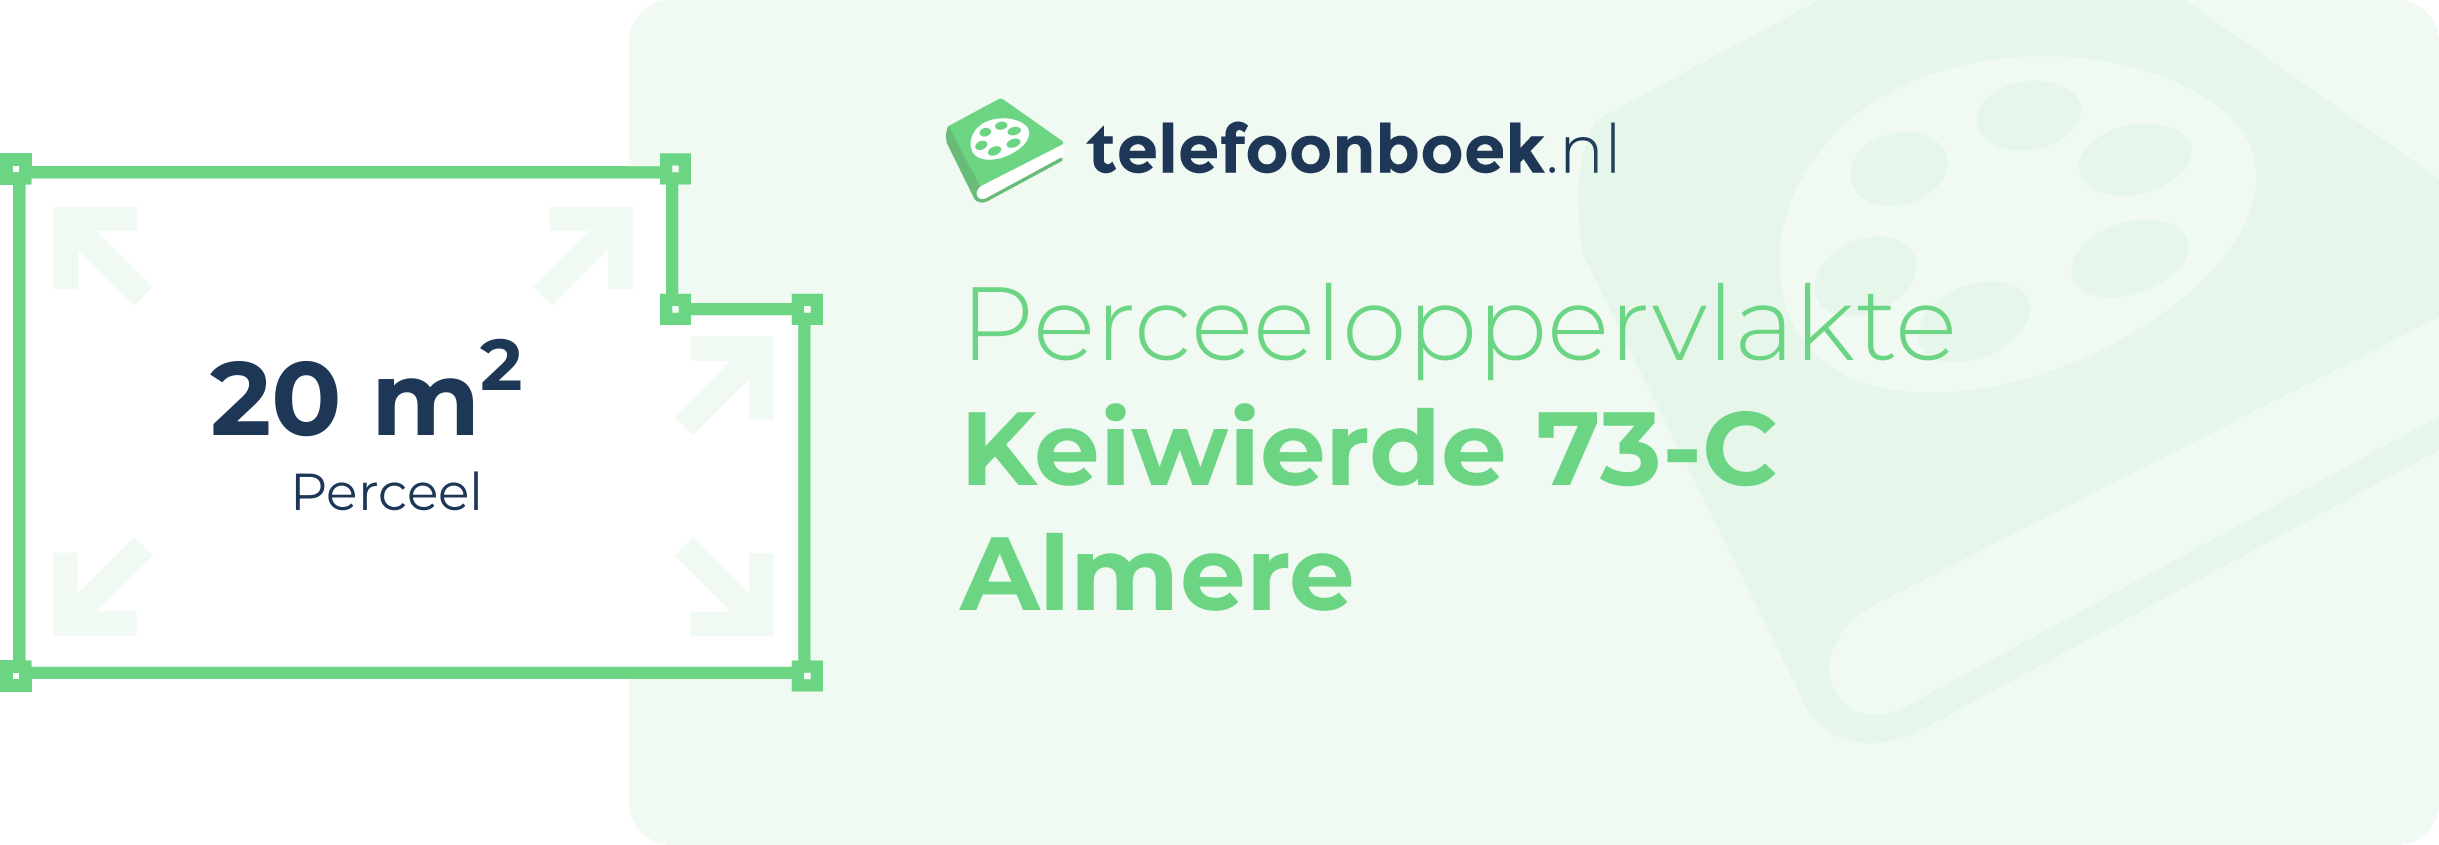 Perceeloppervlakte Keiwierde 73-C Almere